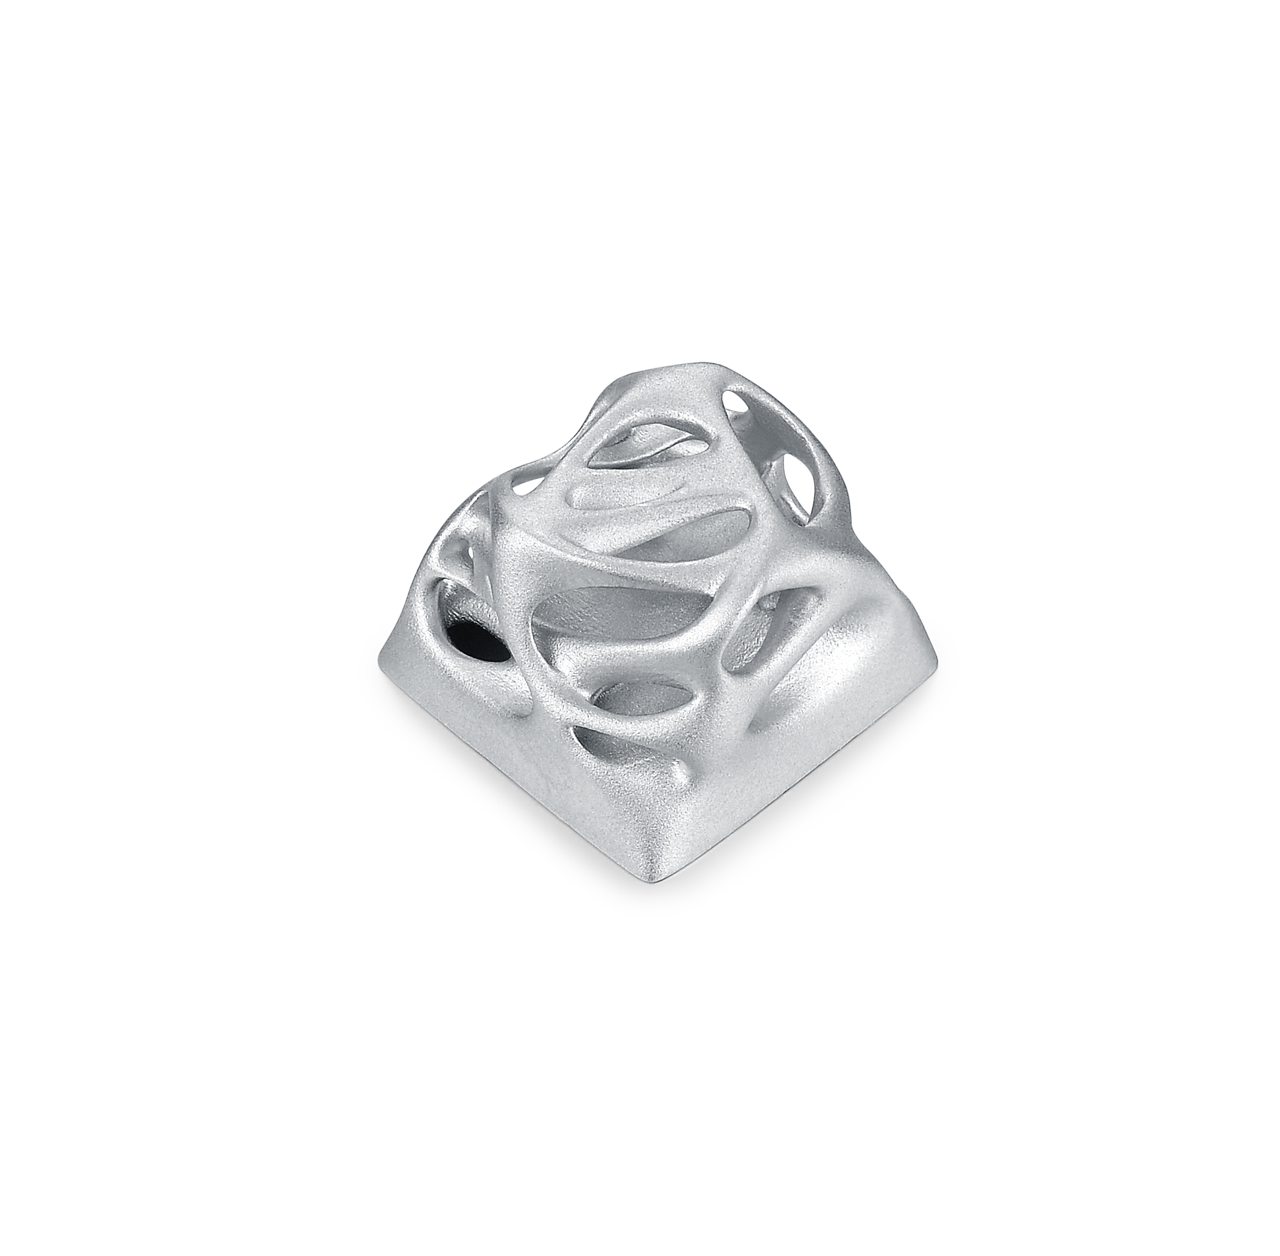 Silver Grind Artisan Keycap Group-Buy